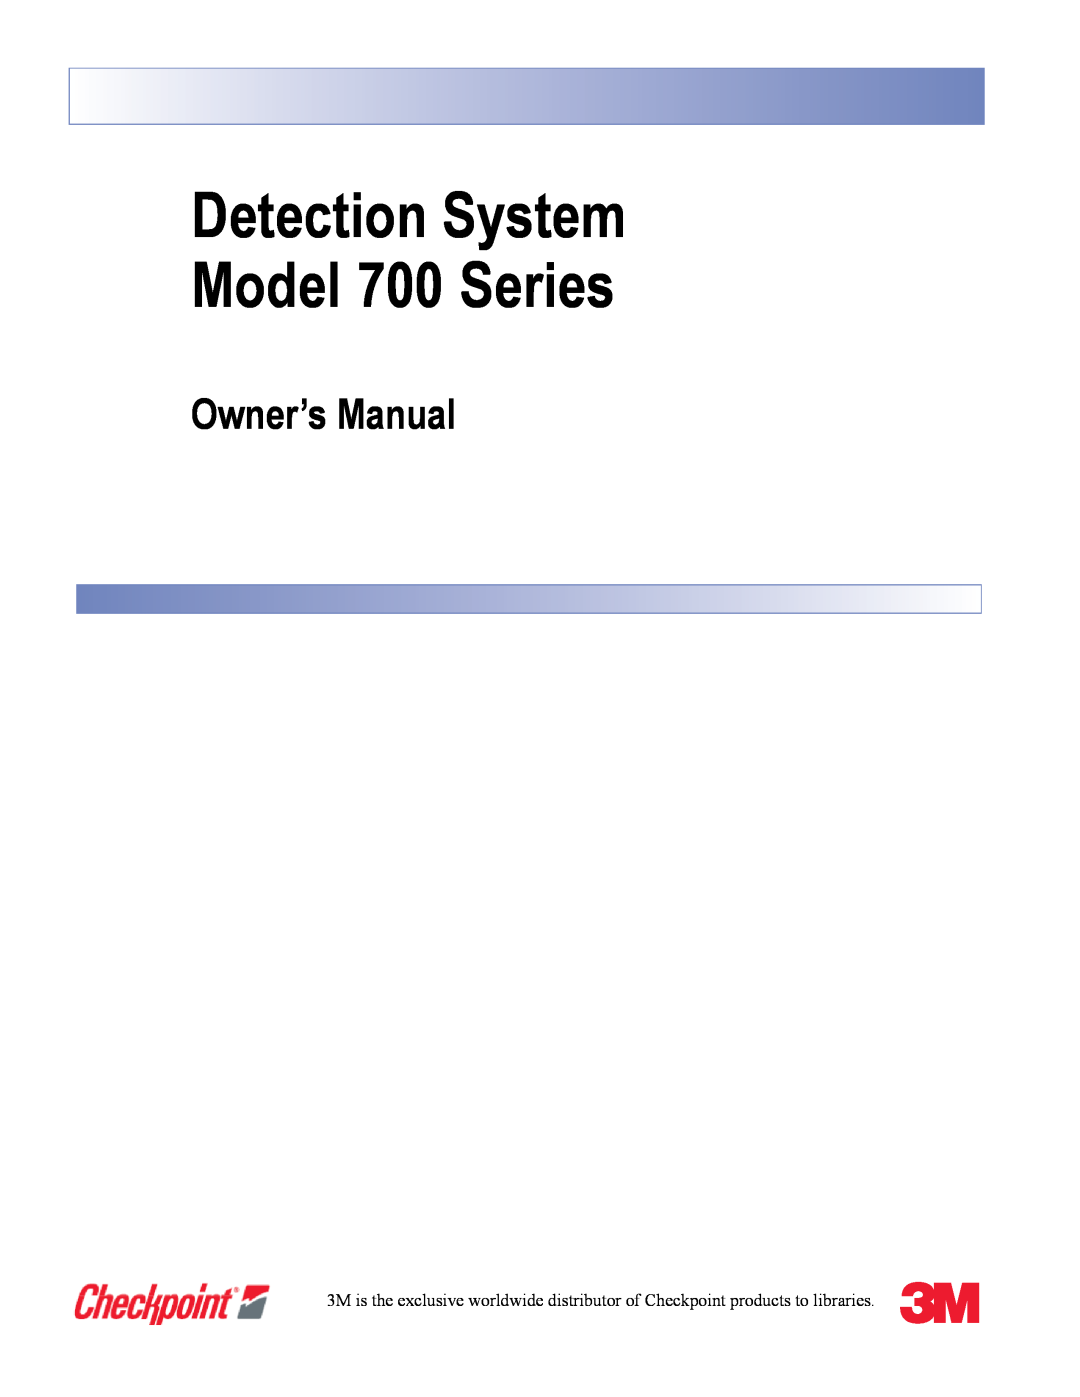 3M owner manual Owner’s Manual, Detection System Model 700 Series 